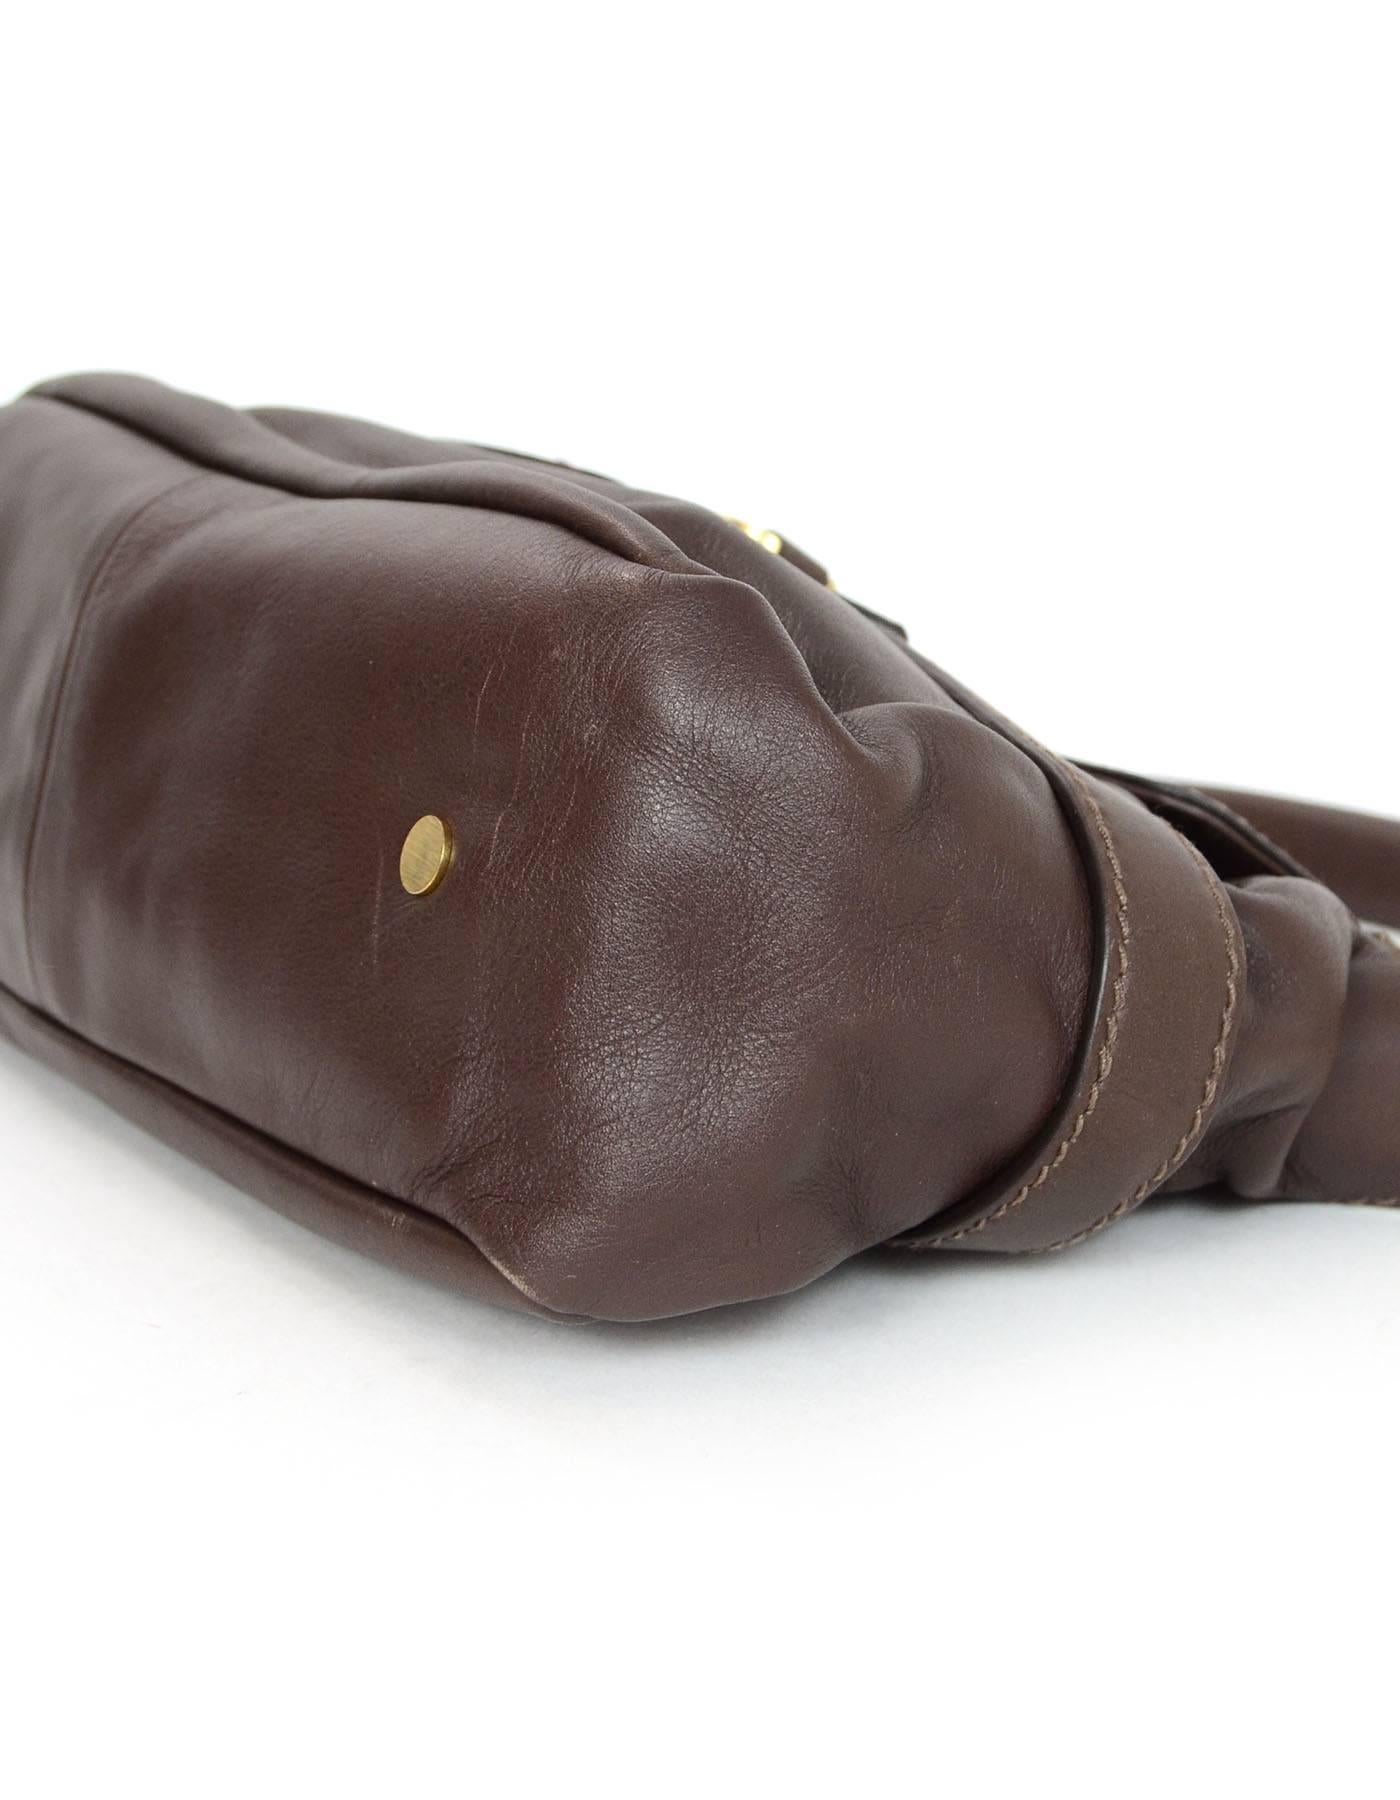 Women's Jimmy Choo Brown Leather Tulita Top Handle Bag